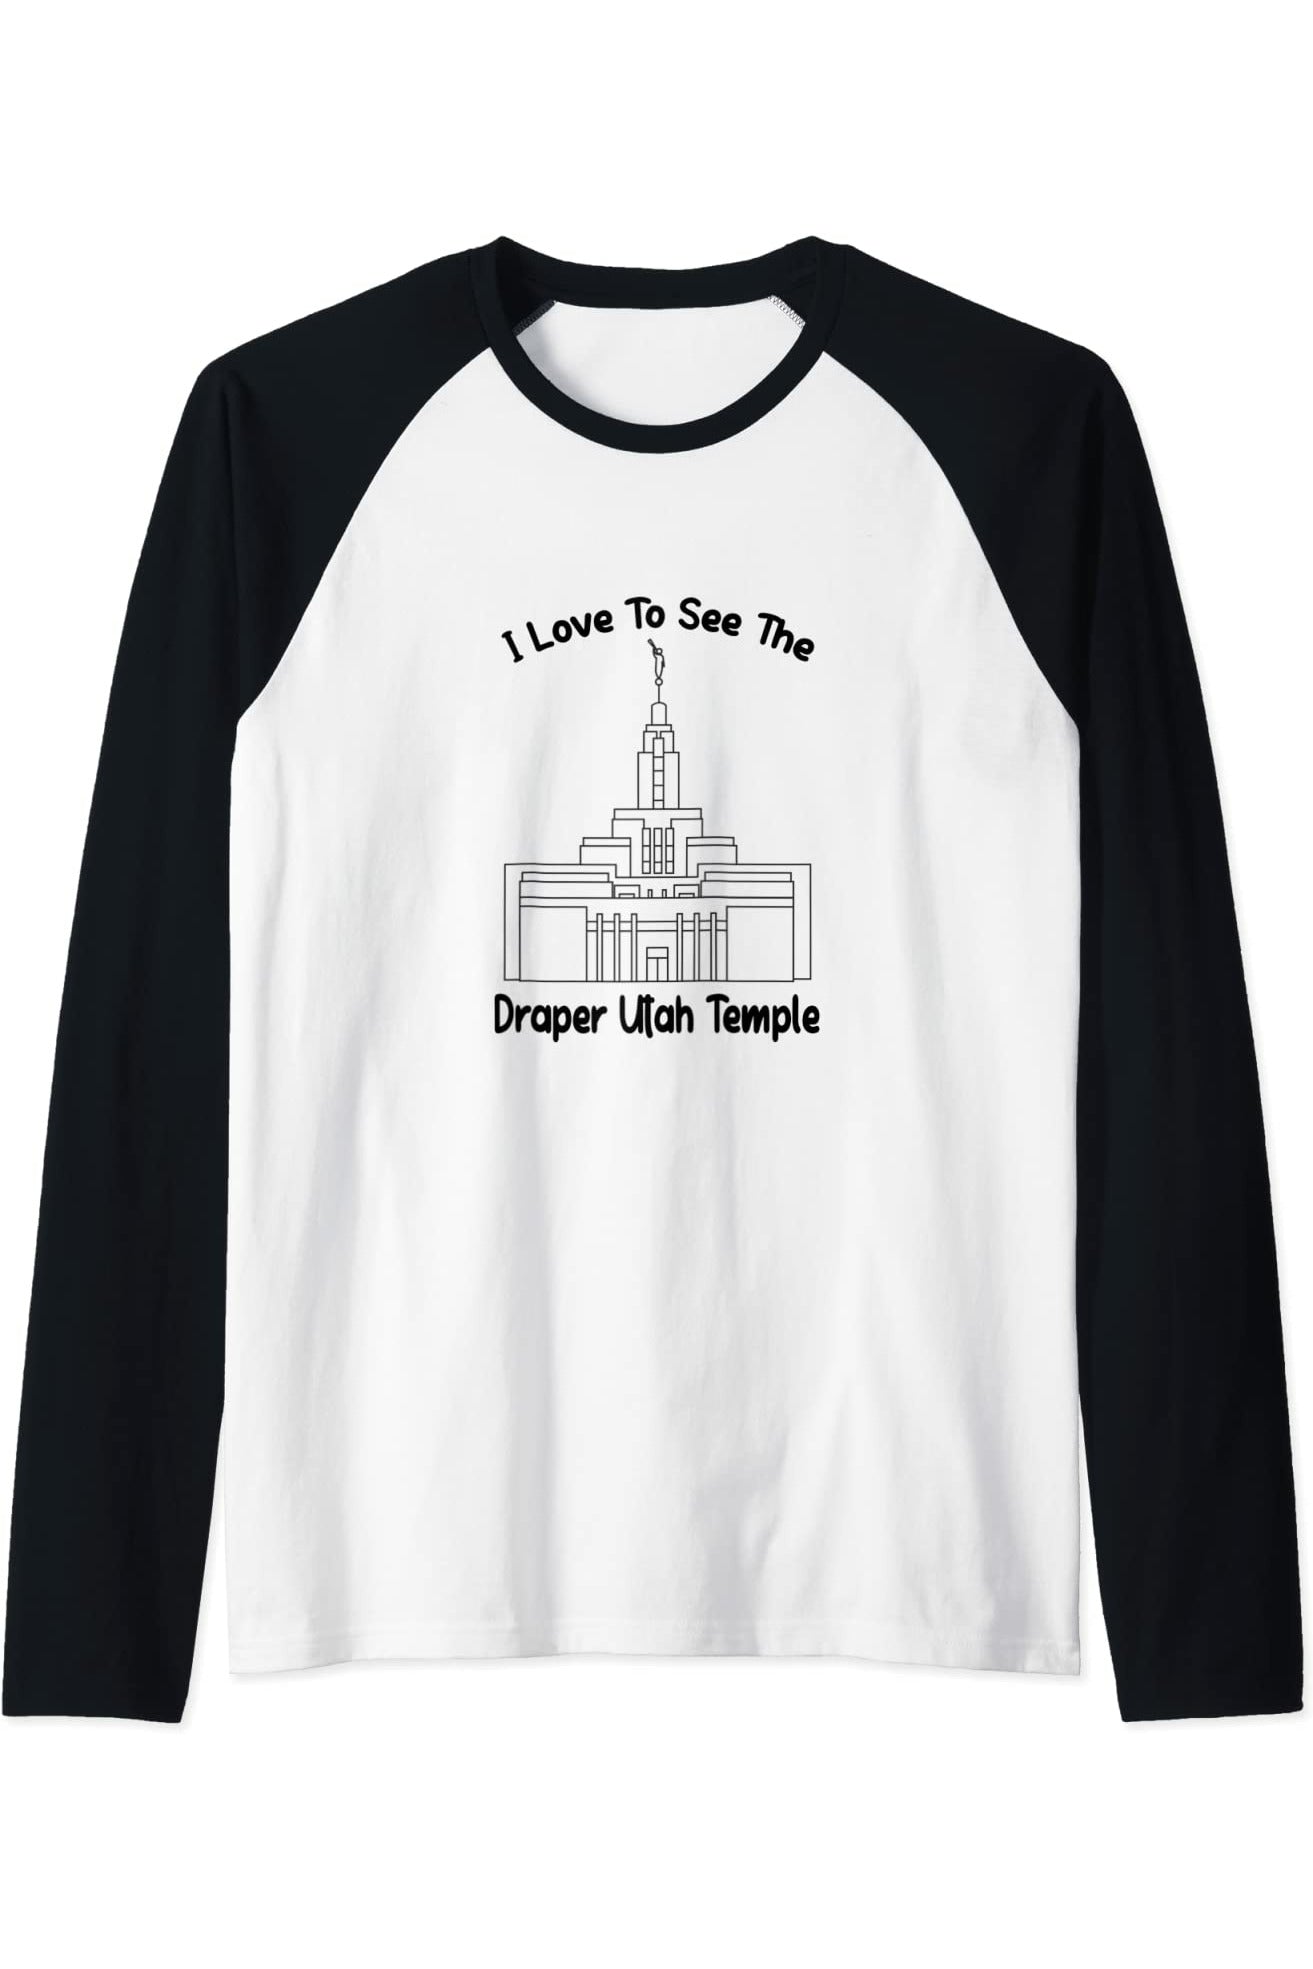 Draper Utah Temple Raglan - Primary Style (English) US